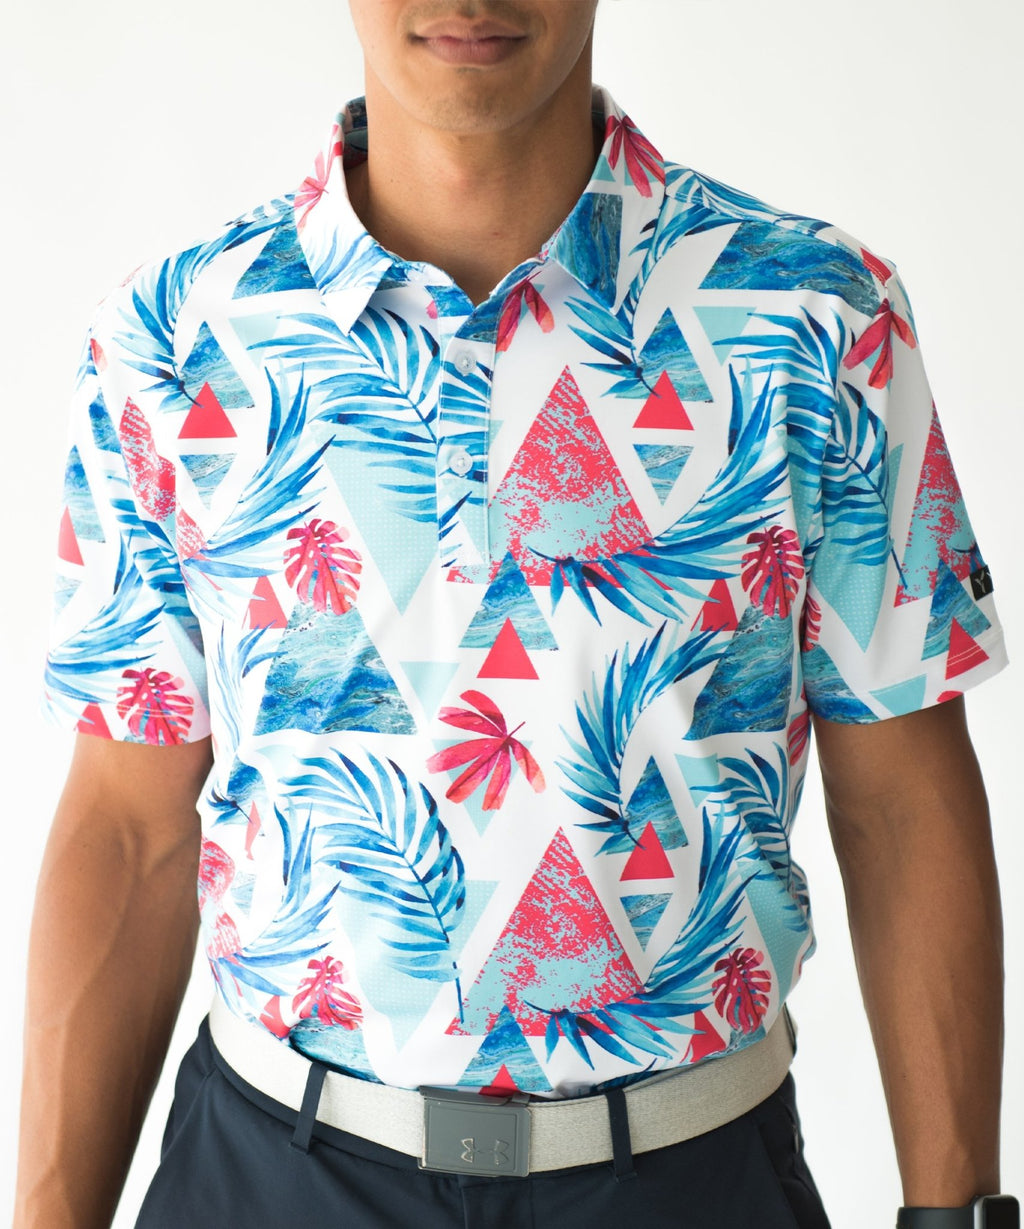 Cool Golf Shirts - Mens & Womens. Mega Cool Golf Polos Only $39.95